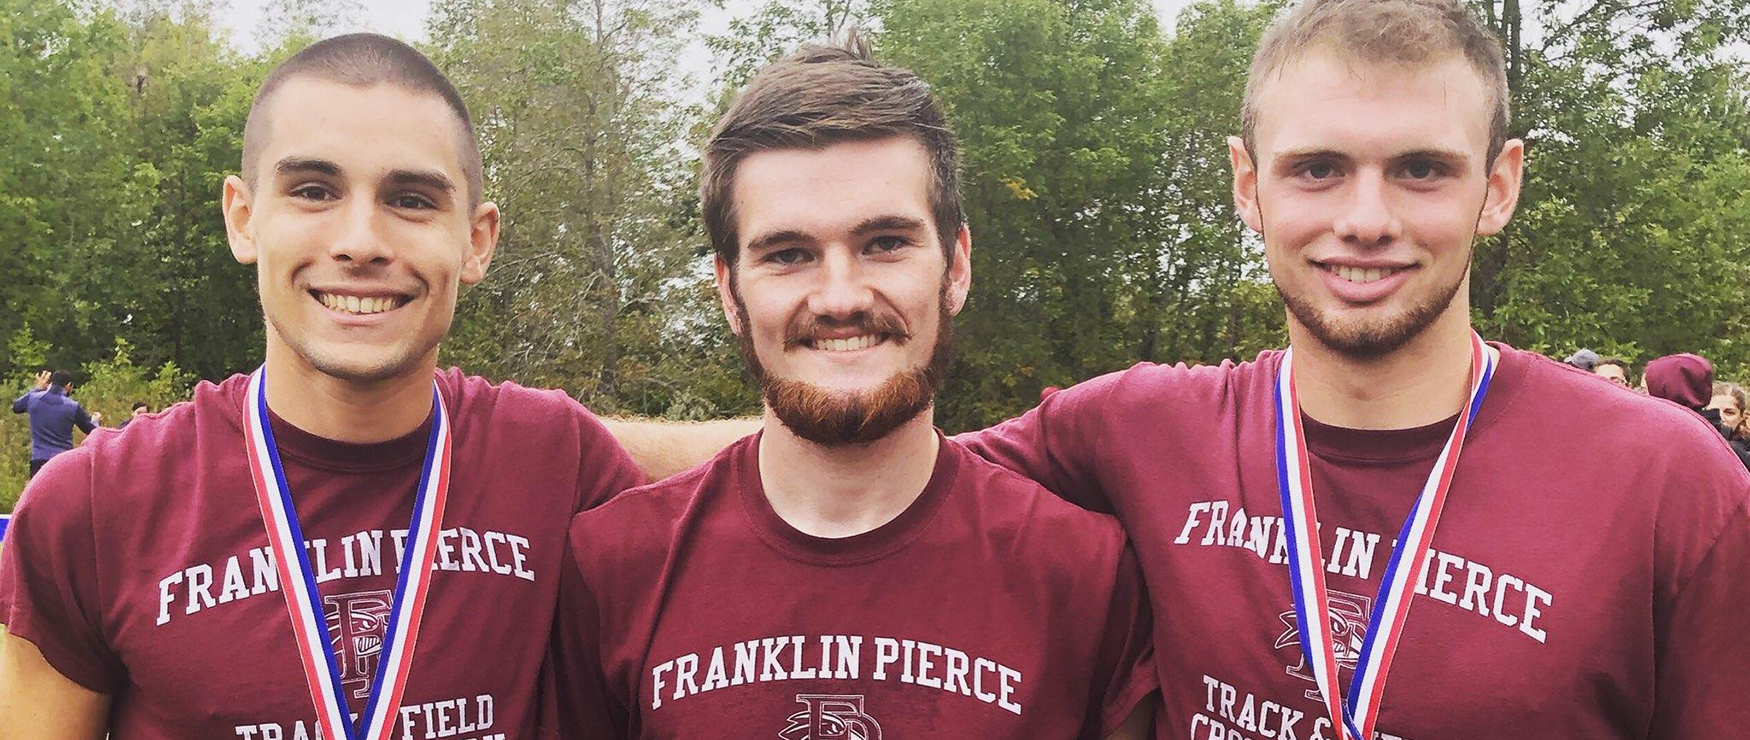 Franklin Pierce University men's cross country